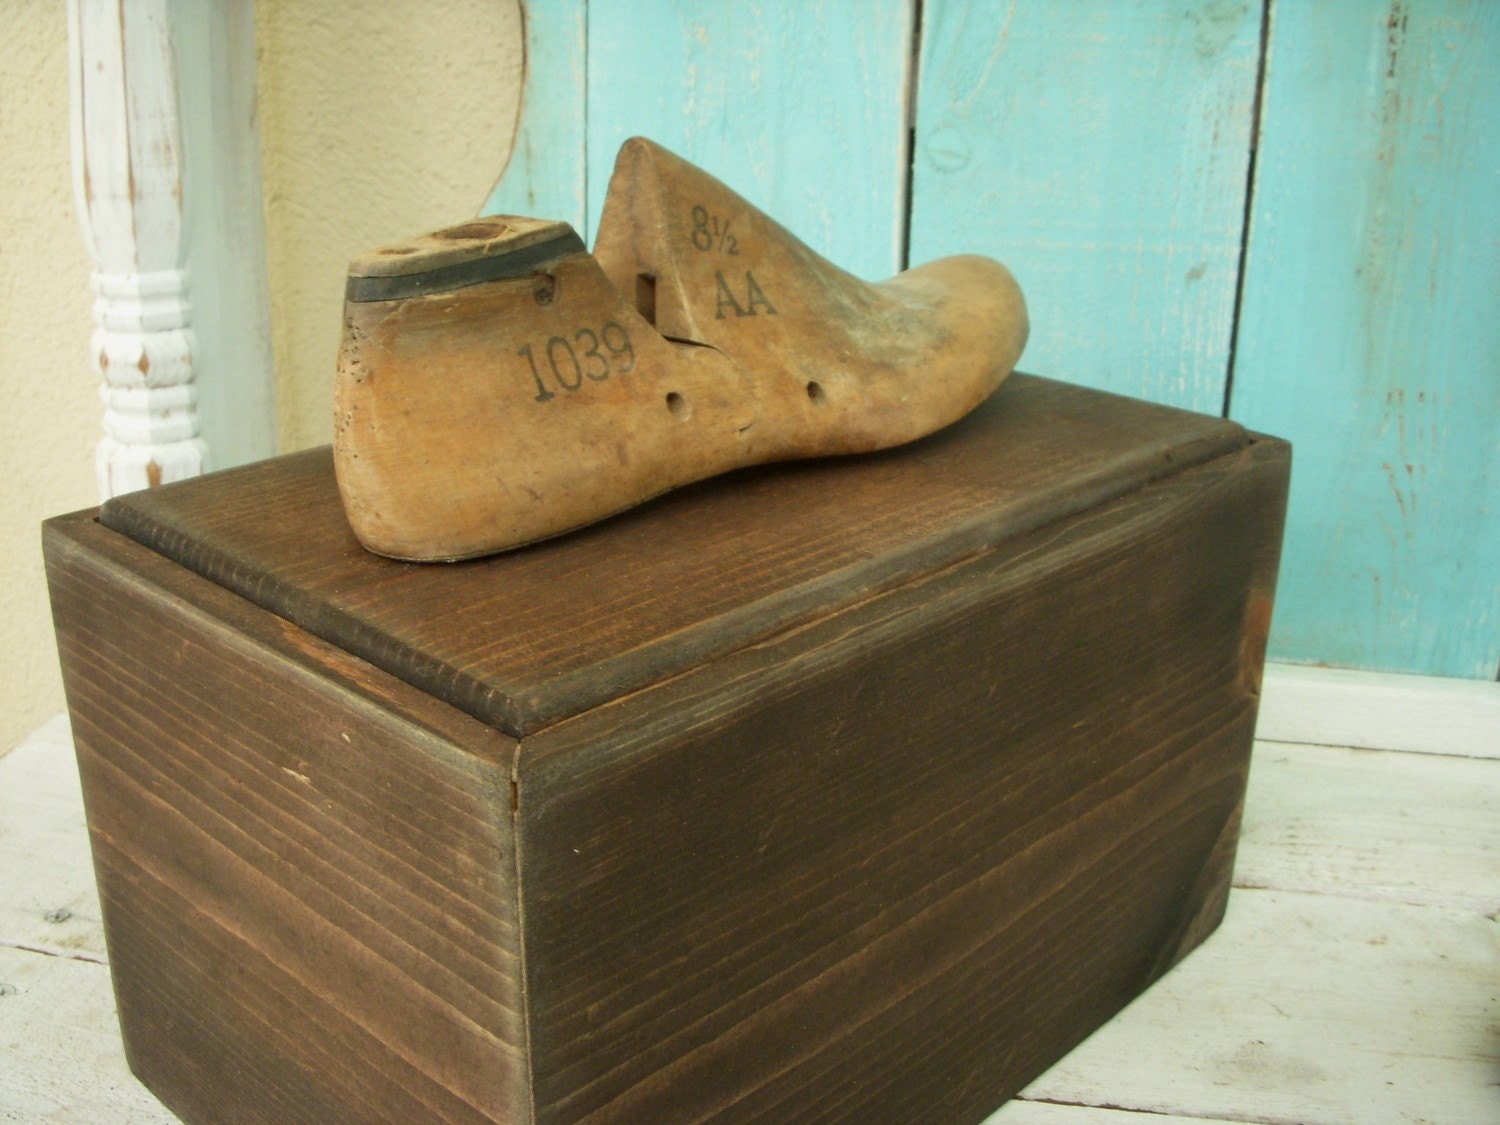  Wooden  Box  Storage  Shoe  Shine Box  Gift Idea Shoe  Last